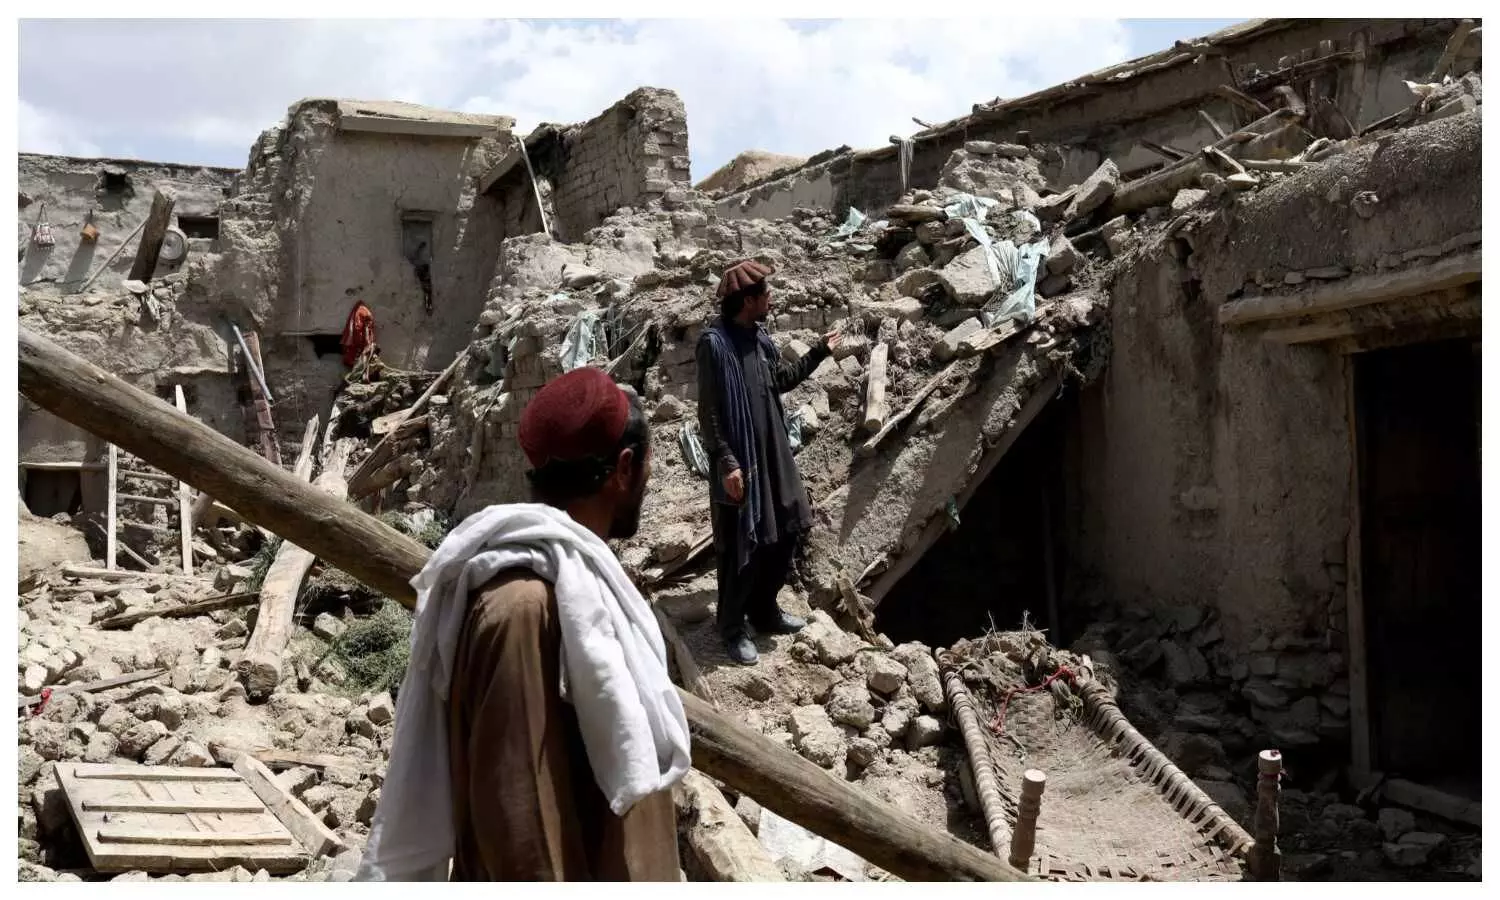 Afghanistan Earthquake: